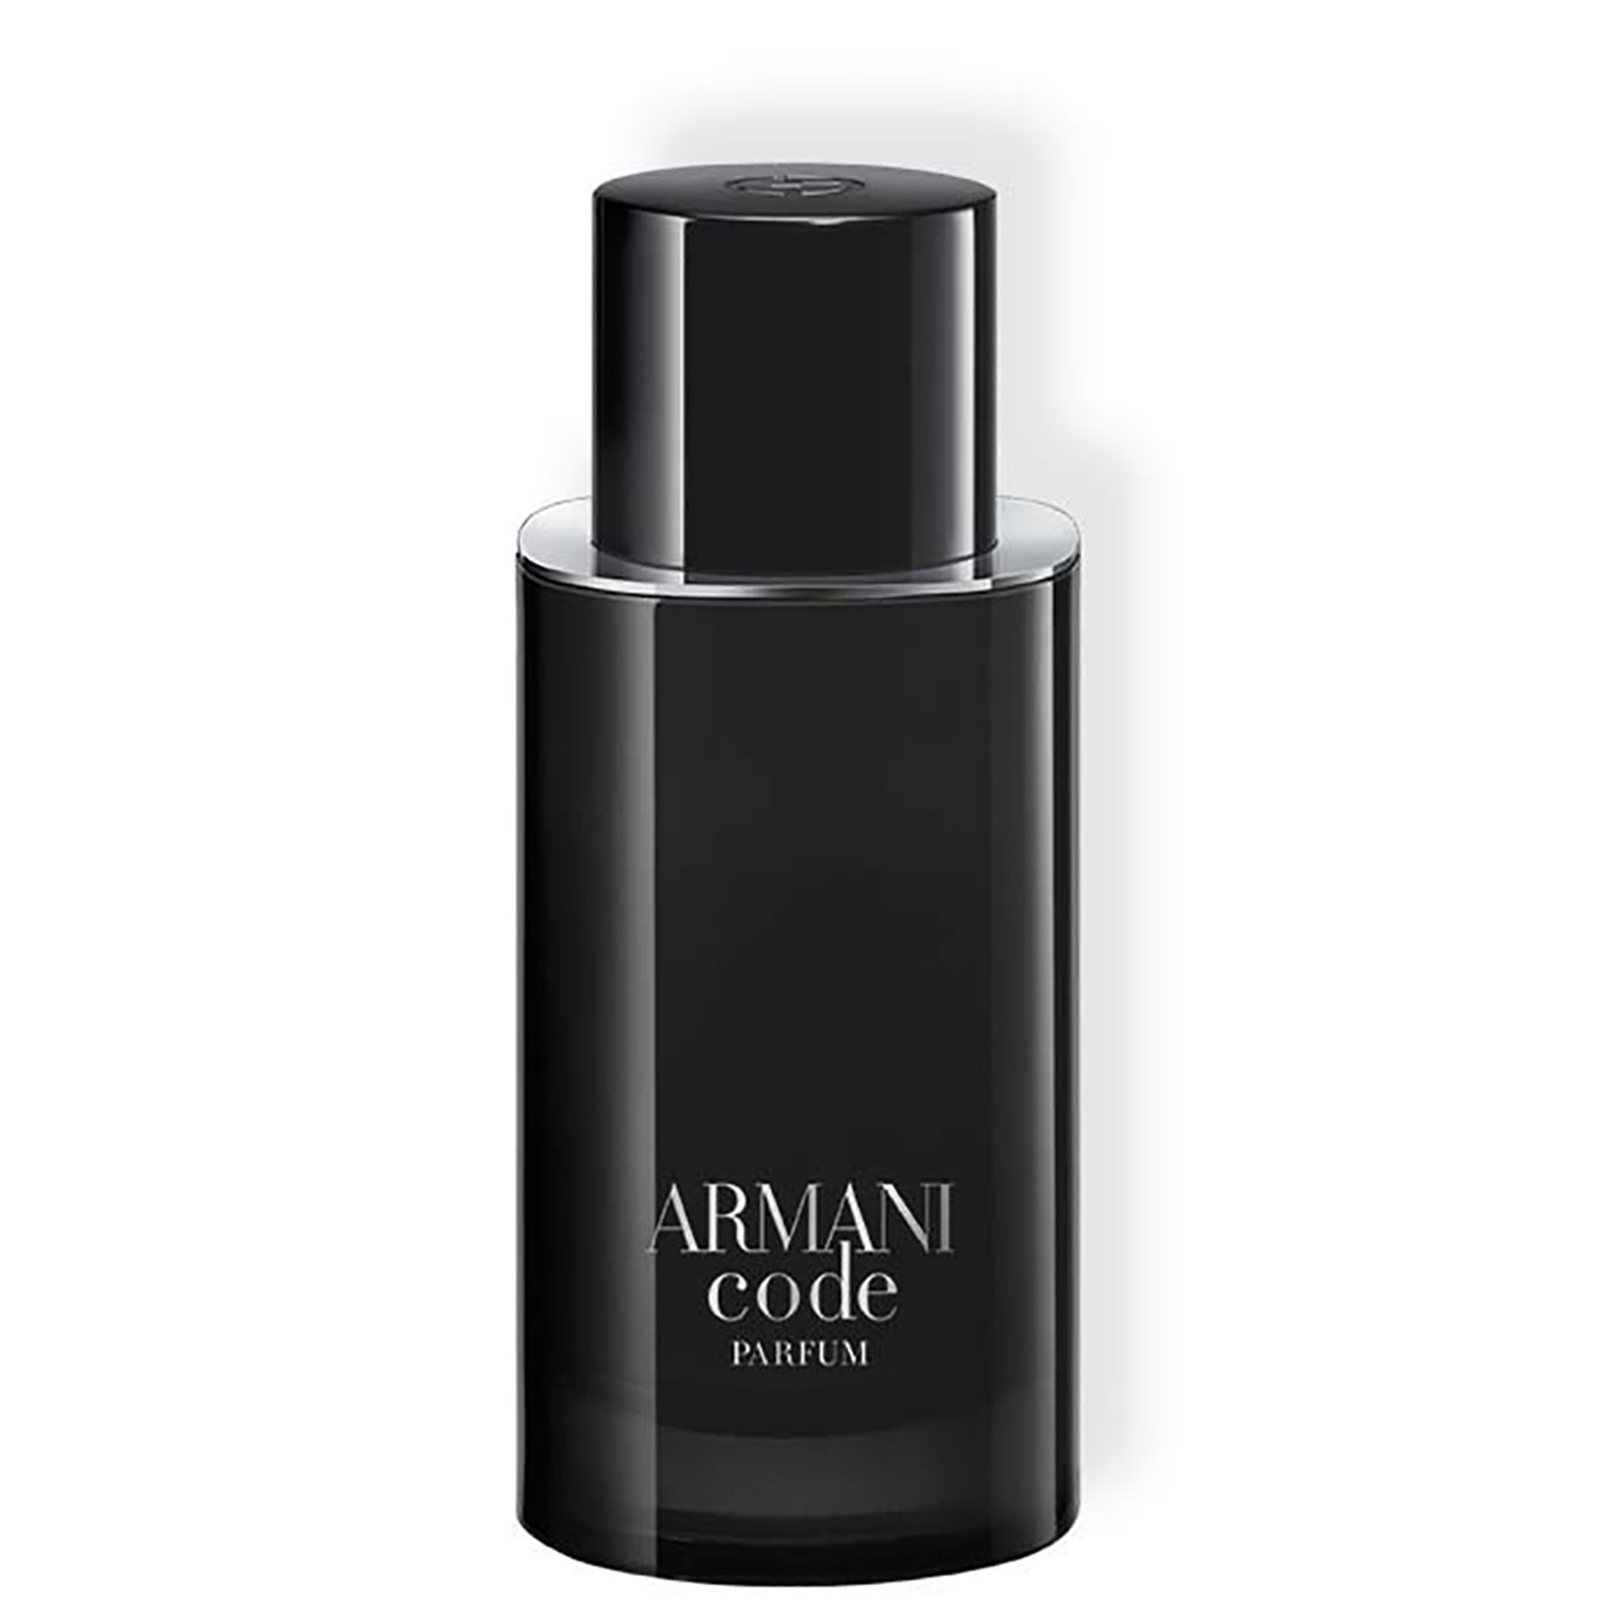 Image of Armani Code Parfum 75ml